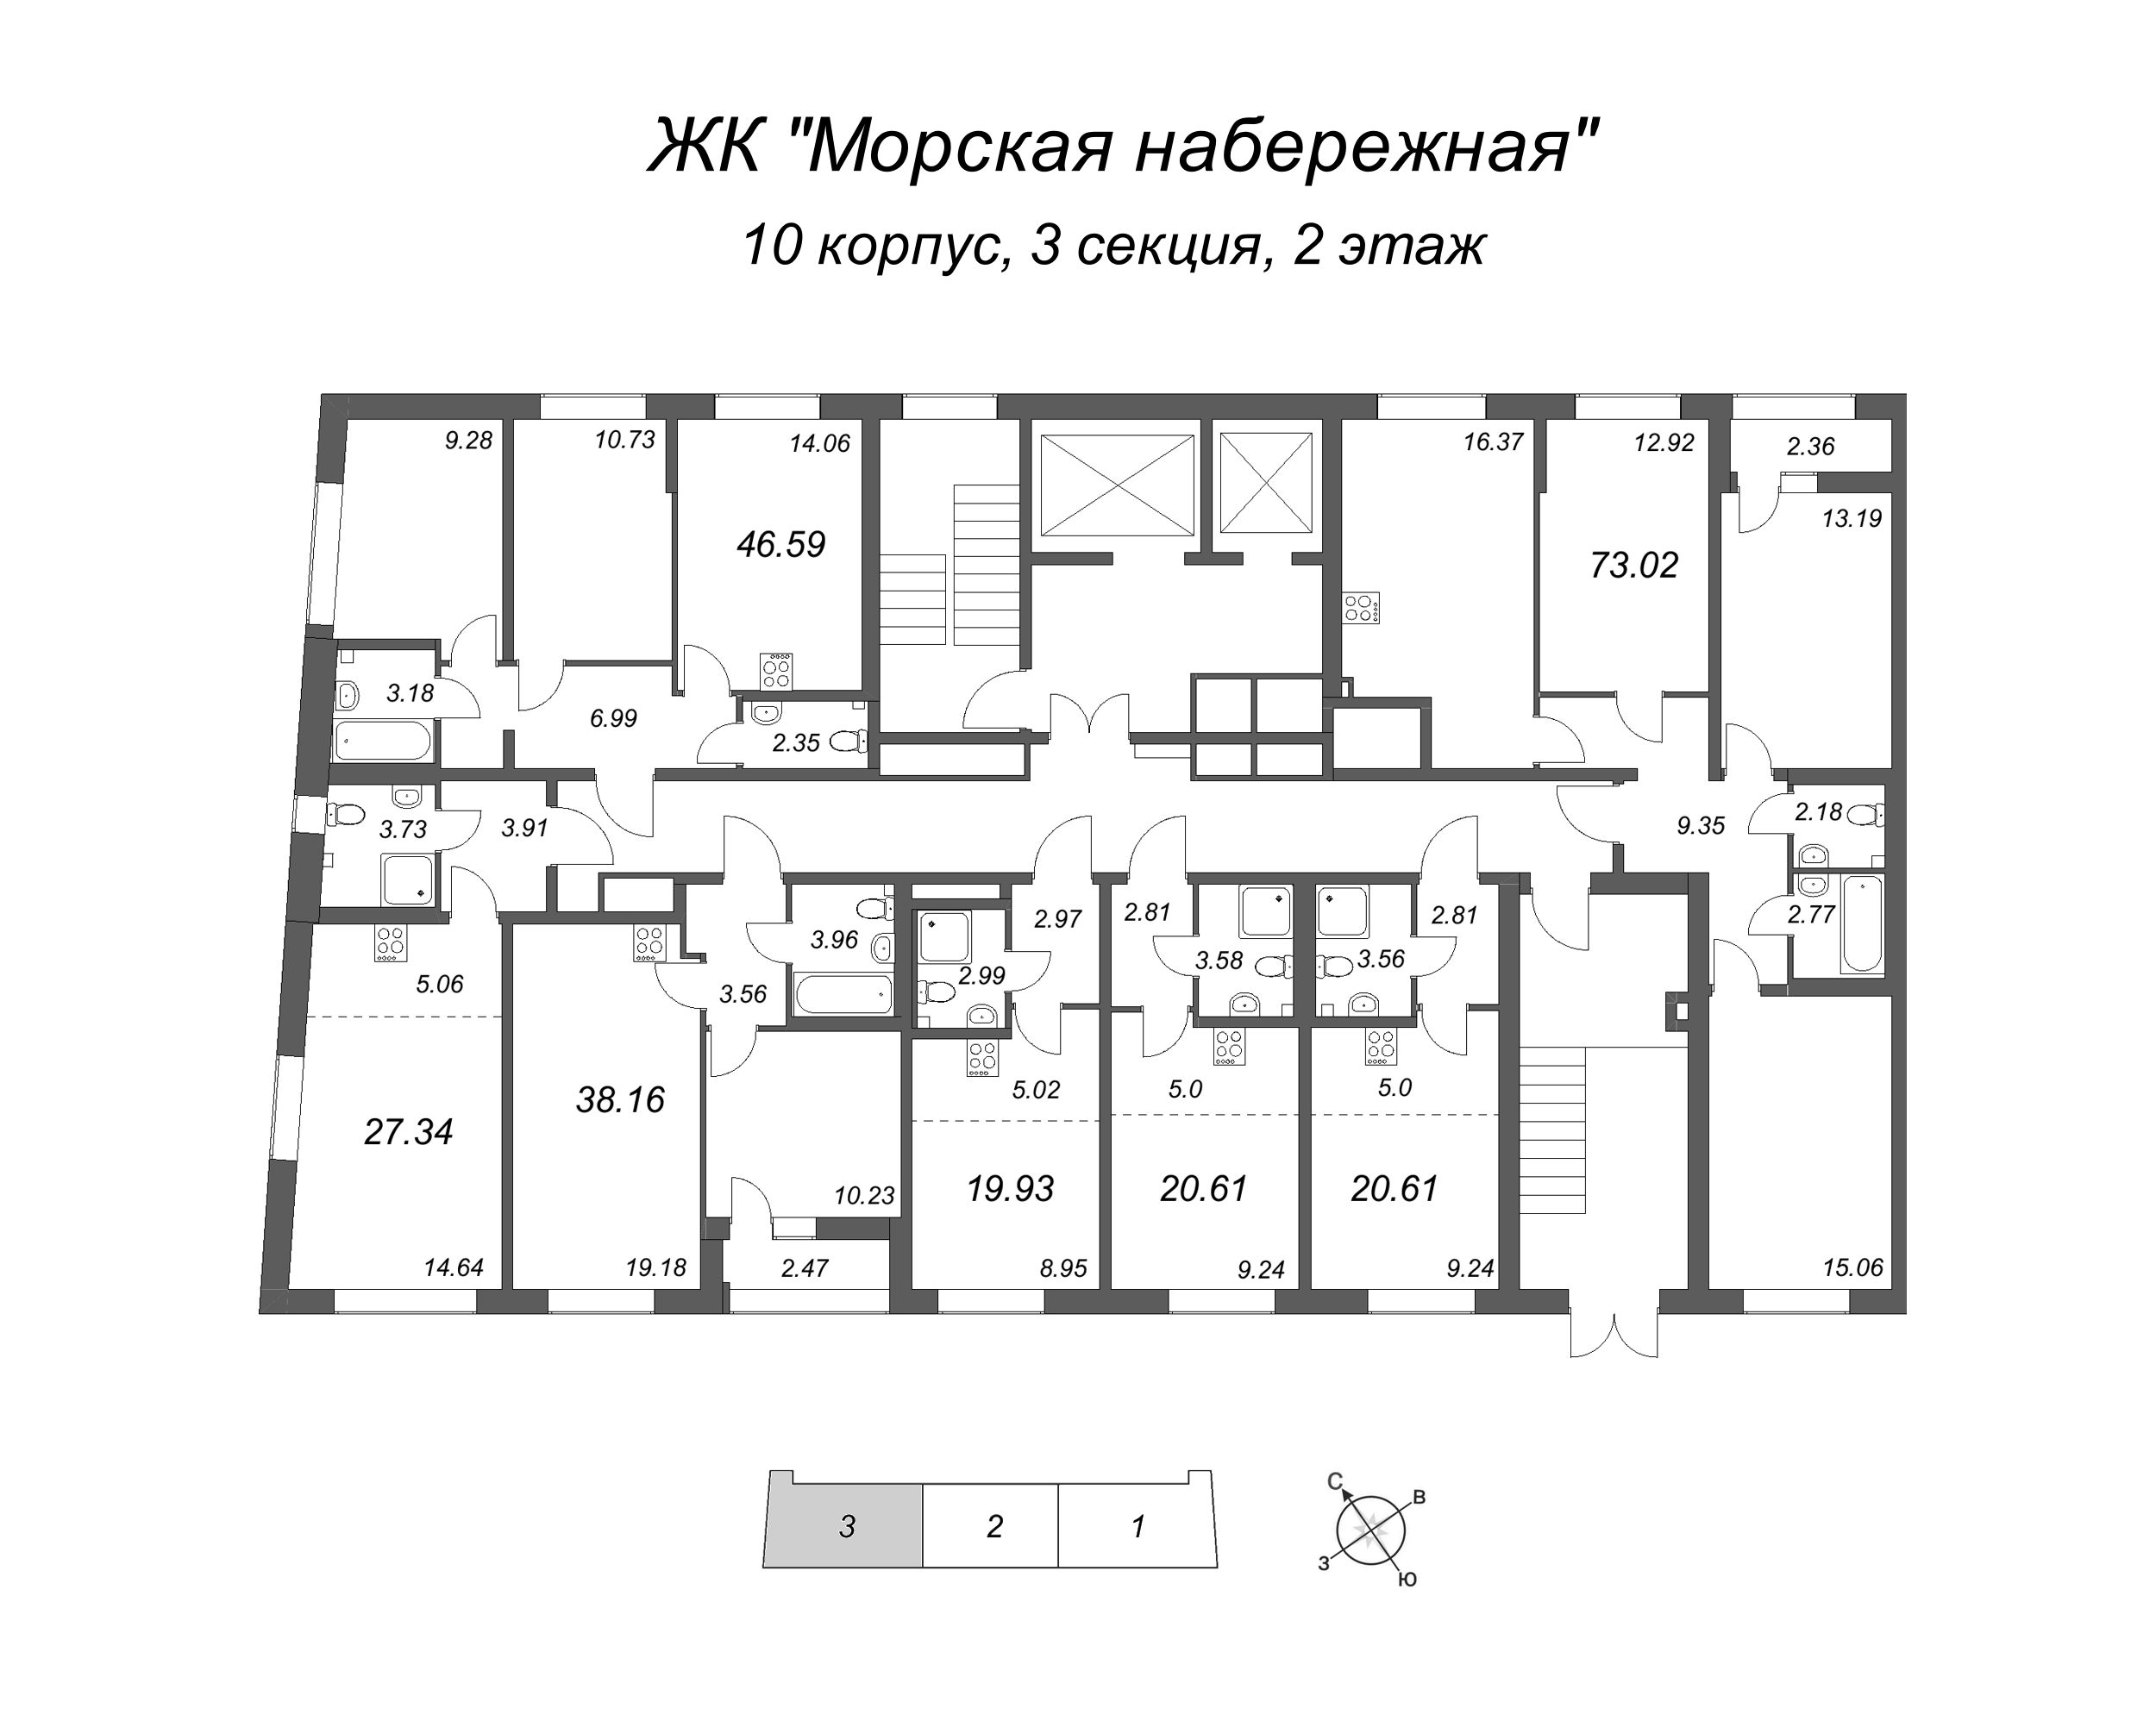 4-комнатная (Евро) квартира, 73.02 м² - планировка этажа